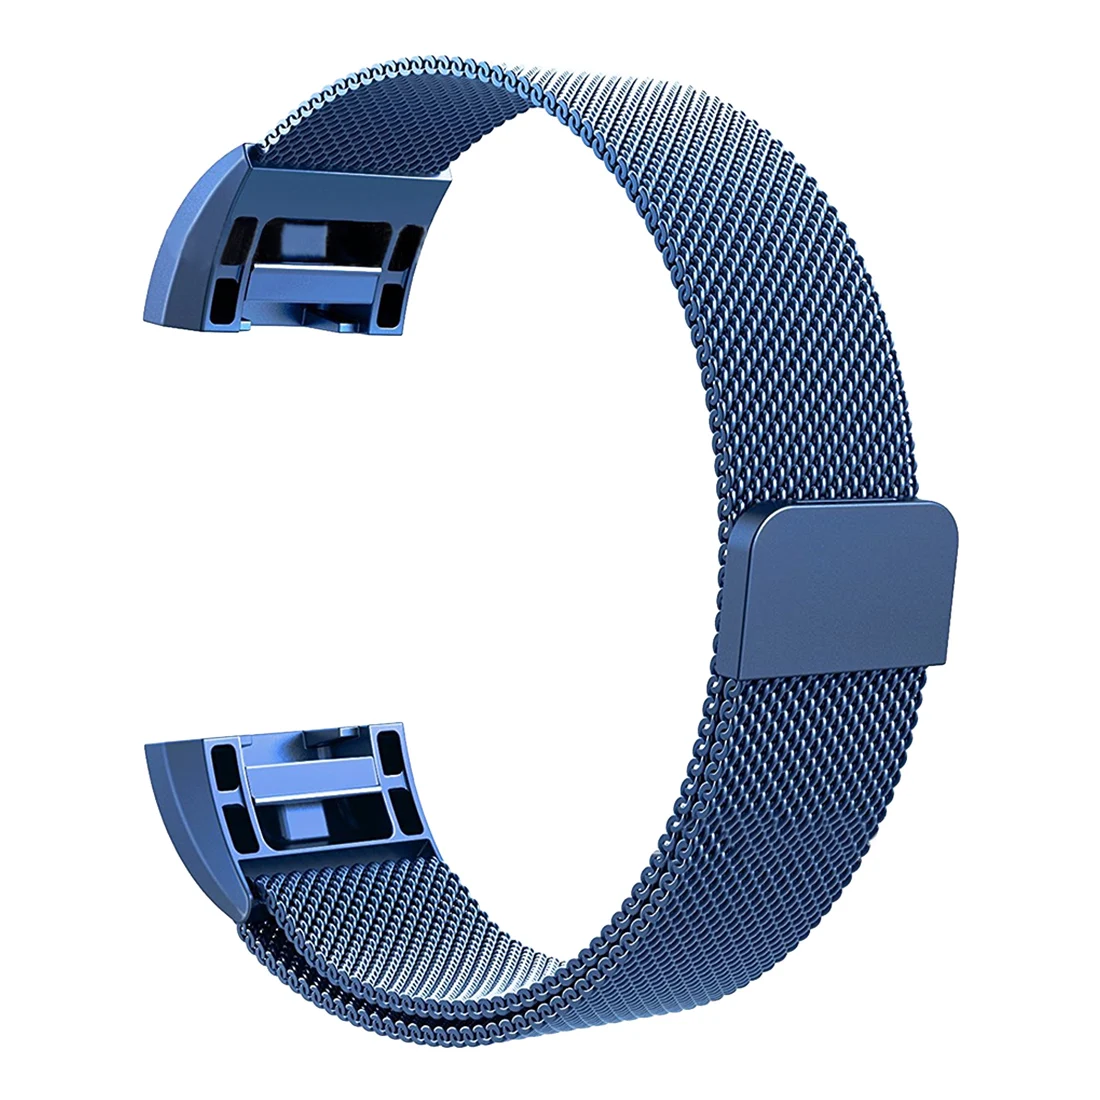 Ремешок Centechia для Fitbit Charge 2 Hr, сменный Браслет из нержавеющей стали для Fit Bit Charge2, умные часы, размеры S, L - Цвет: blue